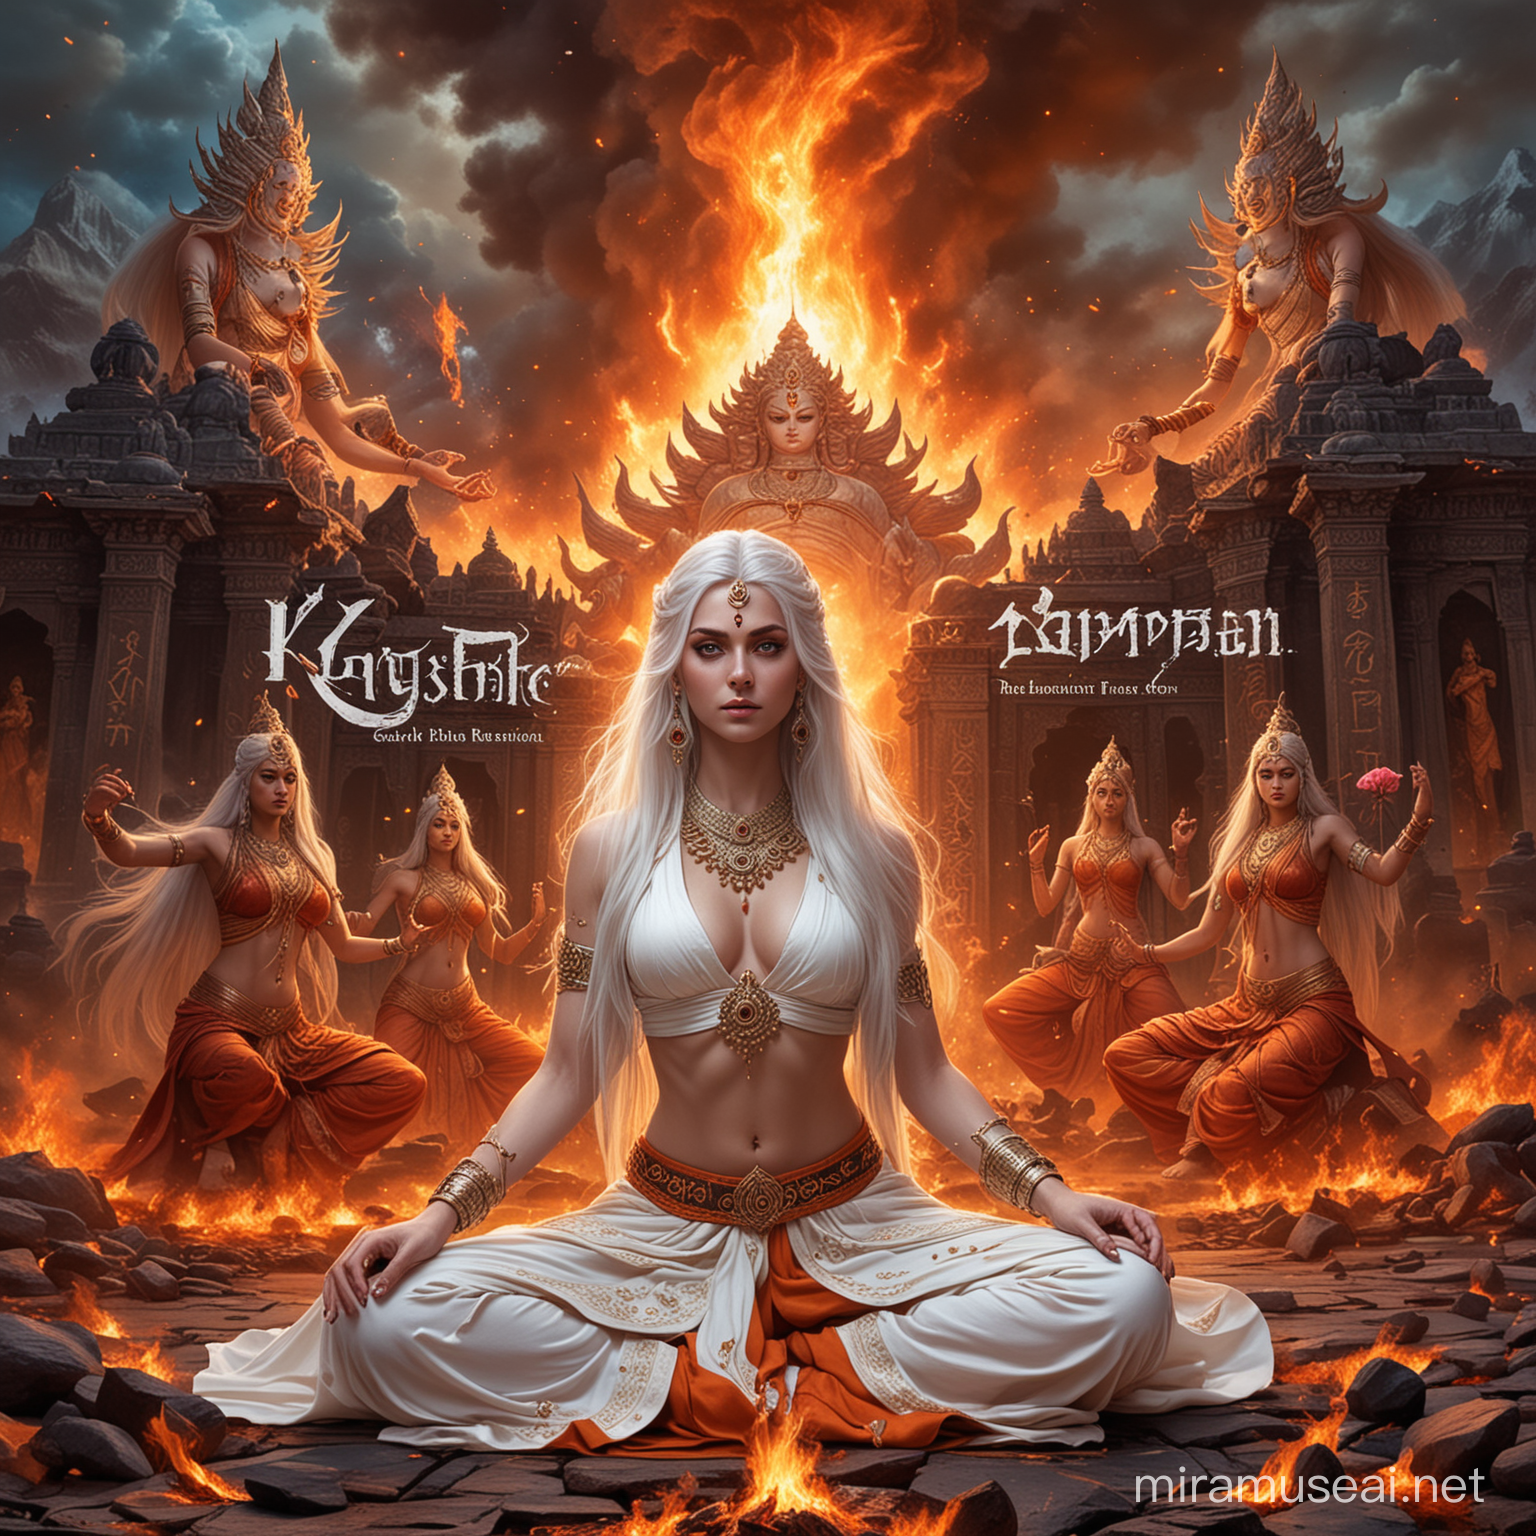 Kayashiel Empress Warrior Goddess Surrounded by Fire